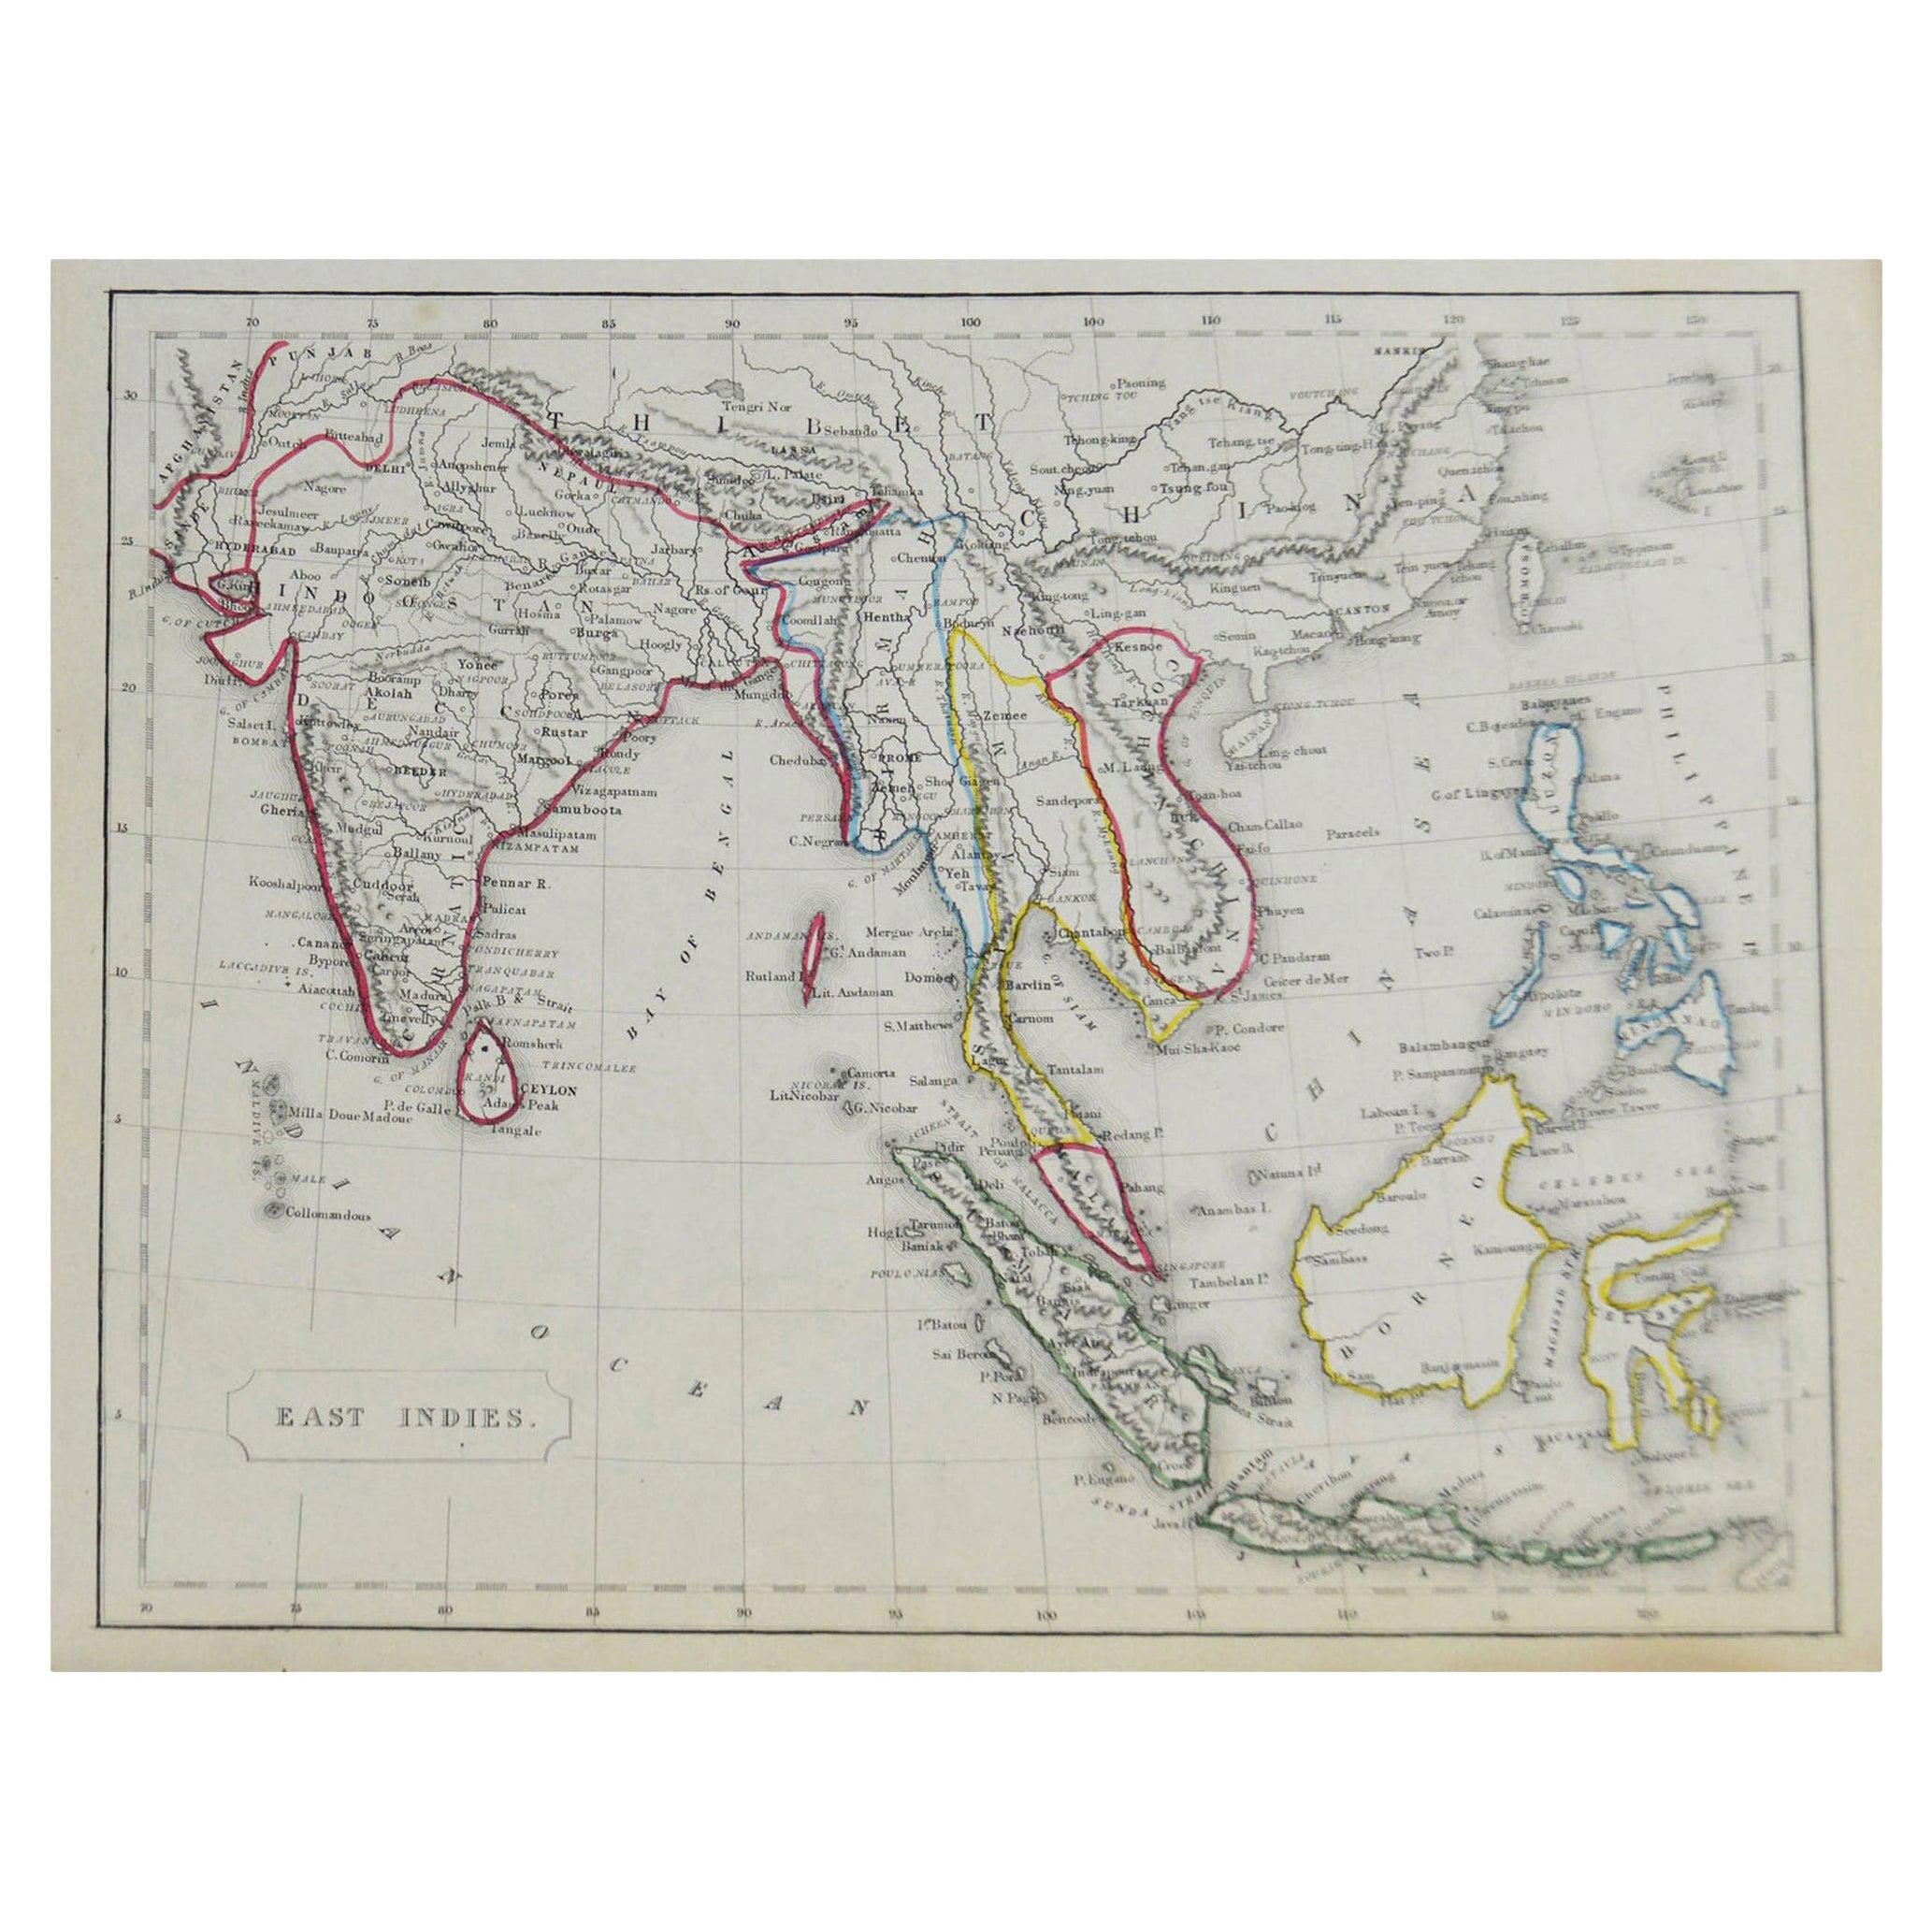 Original Antique Map of South East Asia by Becker, circa 1840